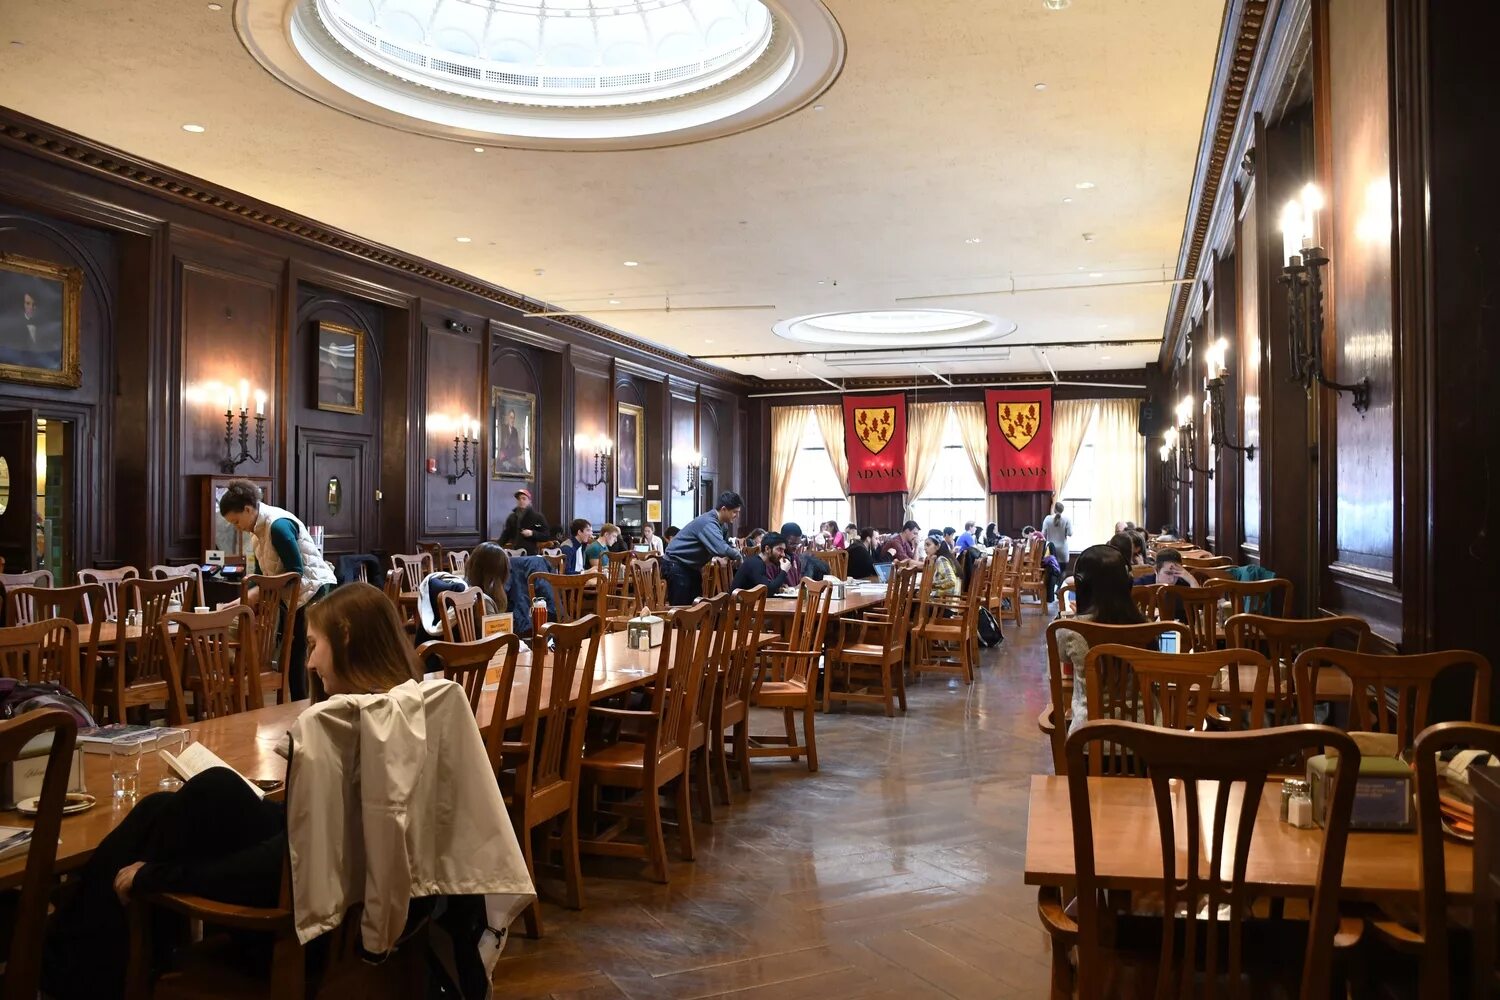 Dining hall. Столовая Гарварда. Harvard University Dining Hall. Harvard Adams House. Dining Hall in Magdalen.